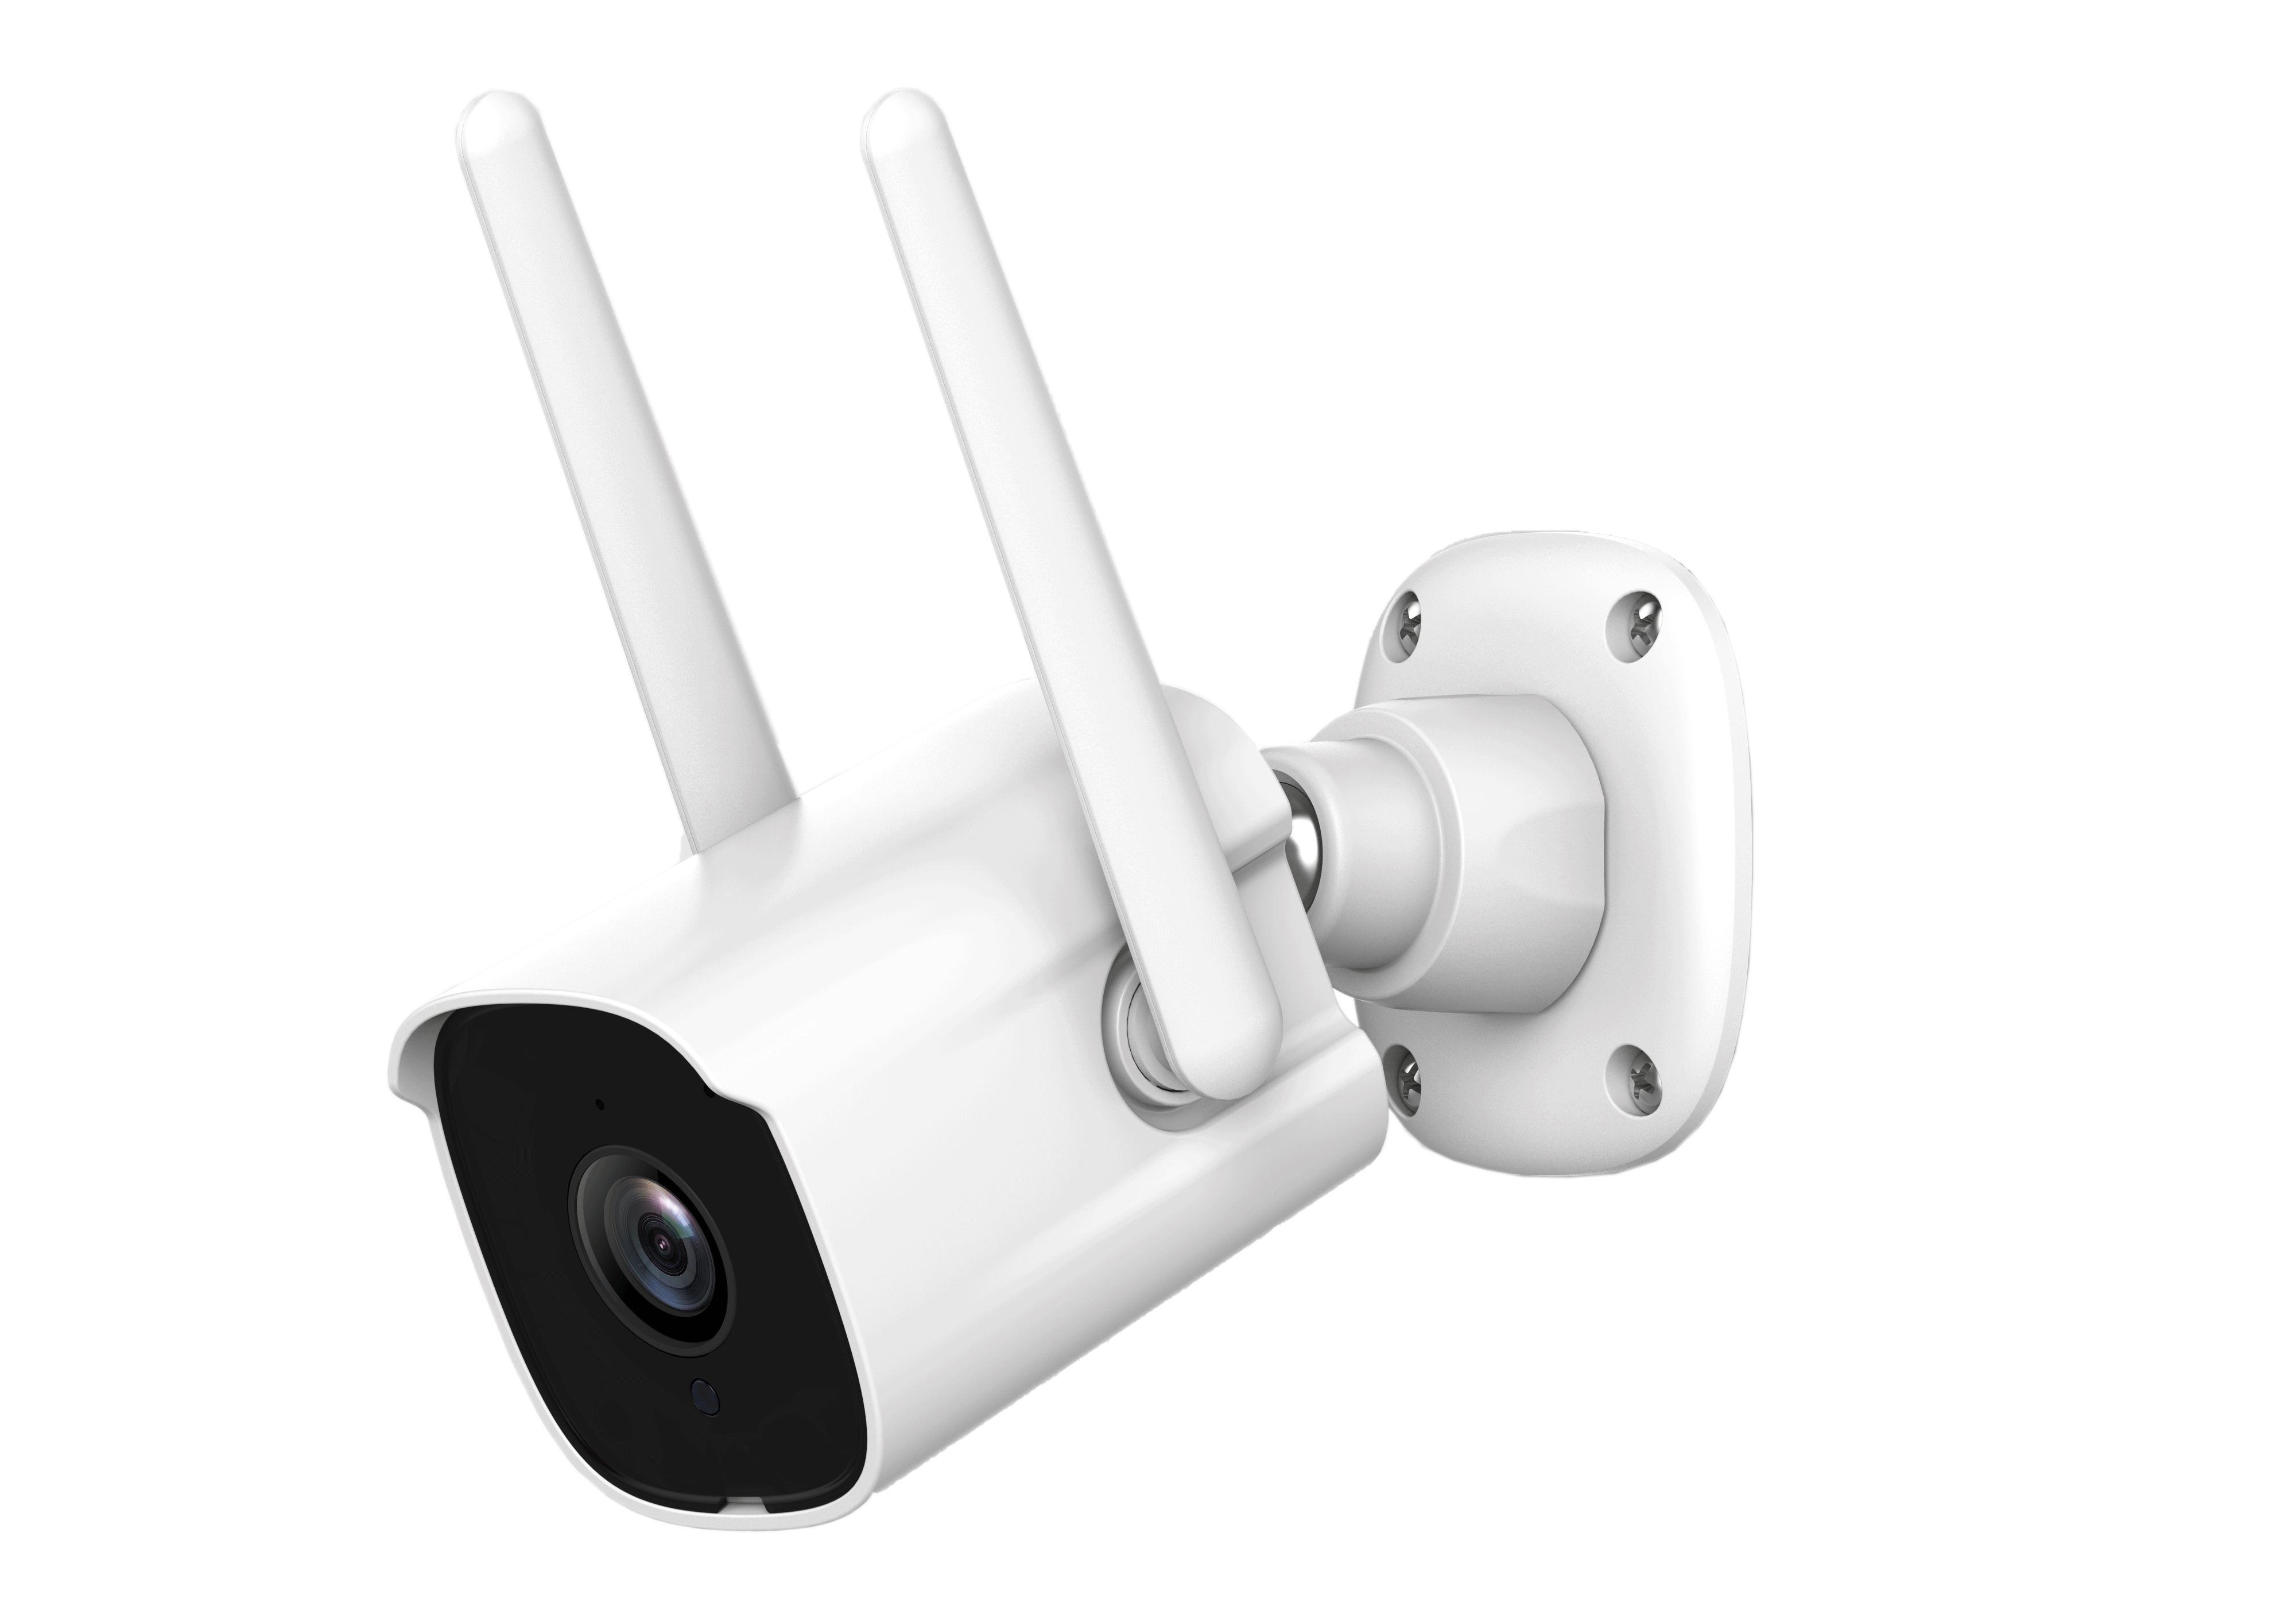 Home wireless surveillance cameras